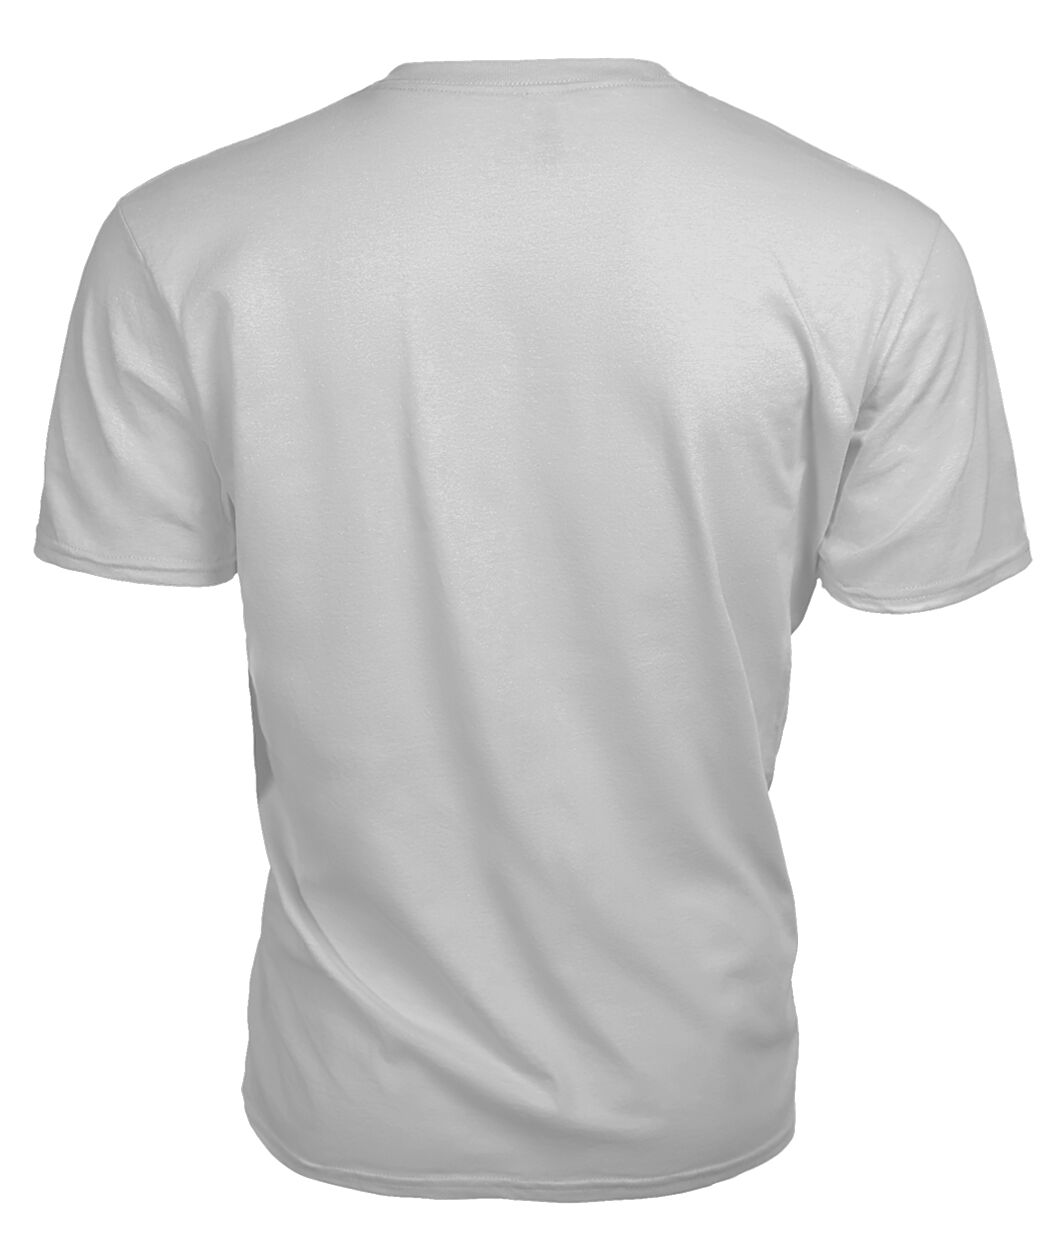 Walkinshaw Family Tartan - 2D T-shirt